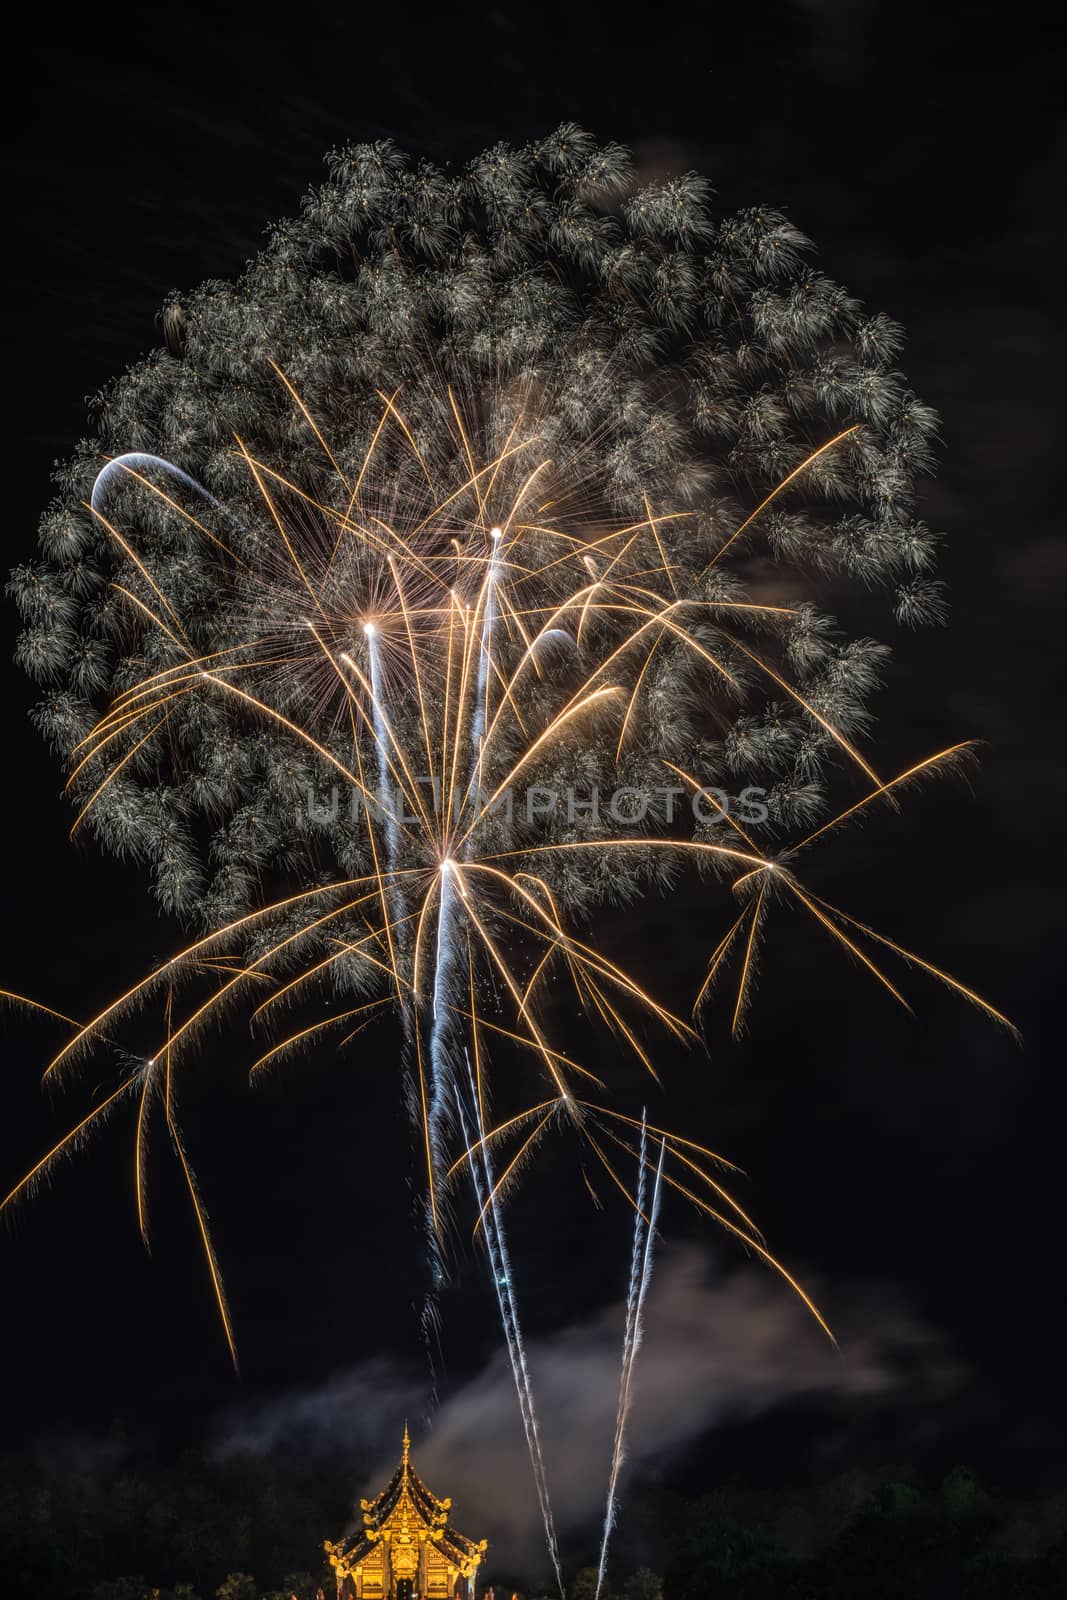 Beautiful display of colorful fireworks, Fireworks on night sky  by rakoptonLPN